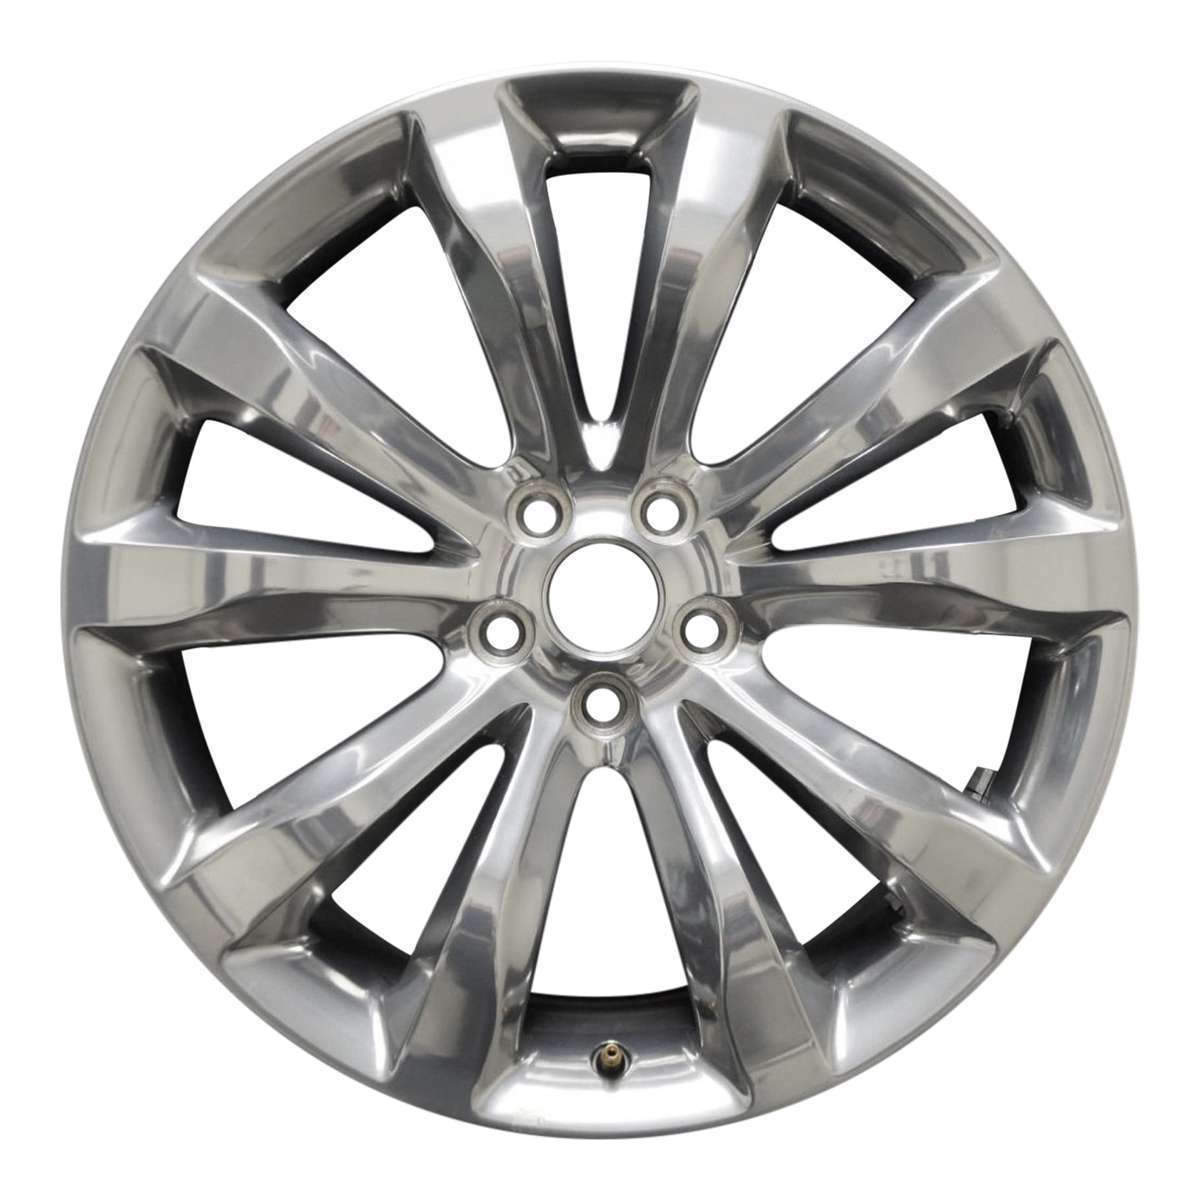 2019 Chrysler 300 20" OEM Wheel Rim W2540AP